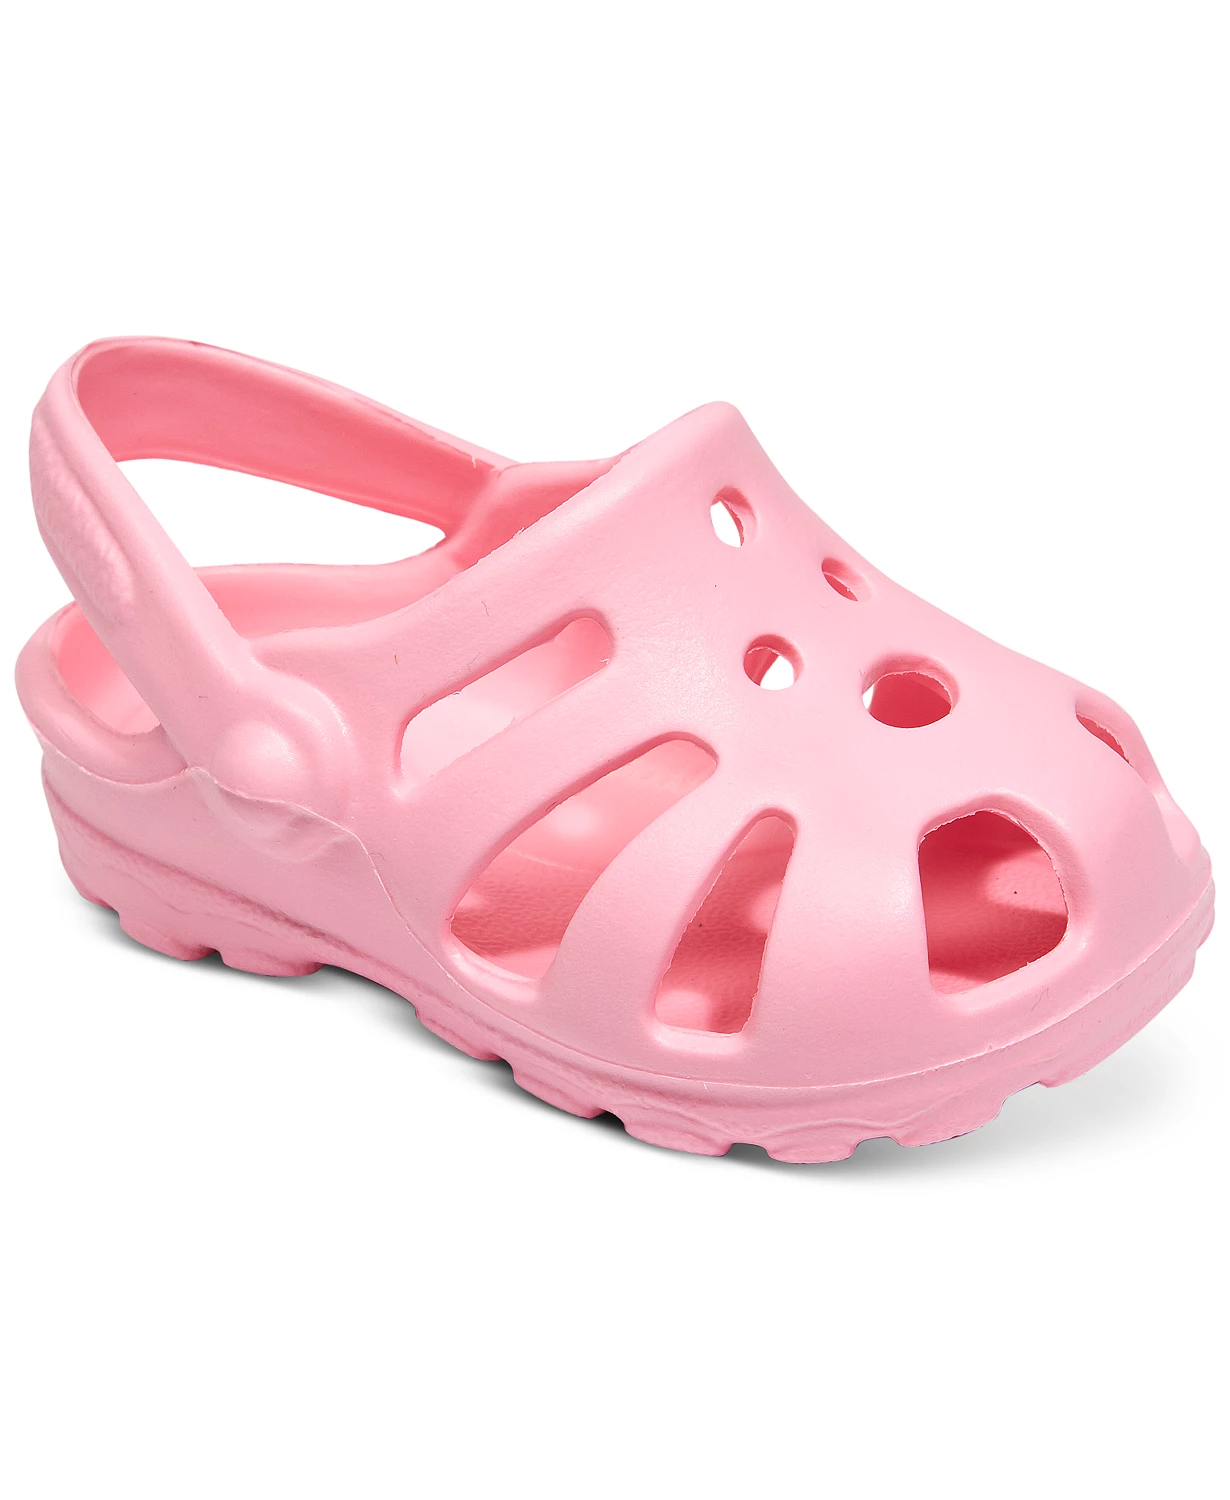 Macy’s: Baby Boys & Girls Closed-Toe Sandals $4.73